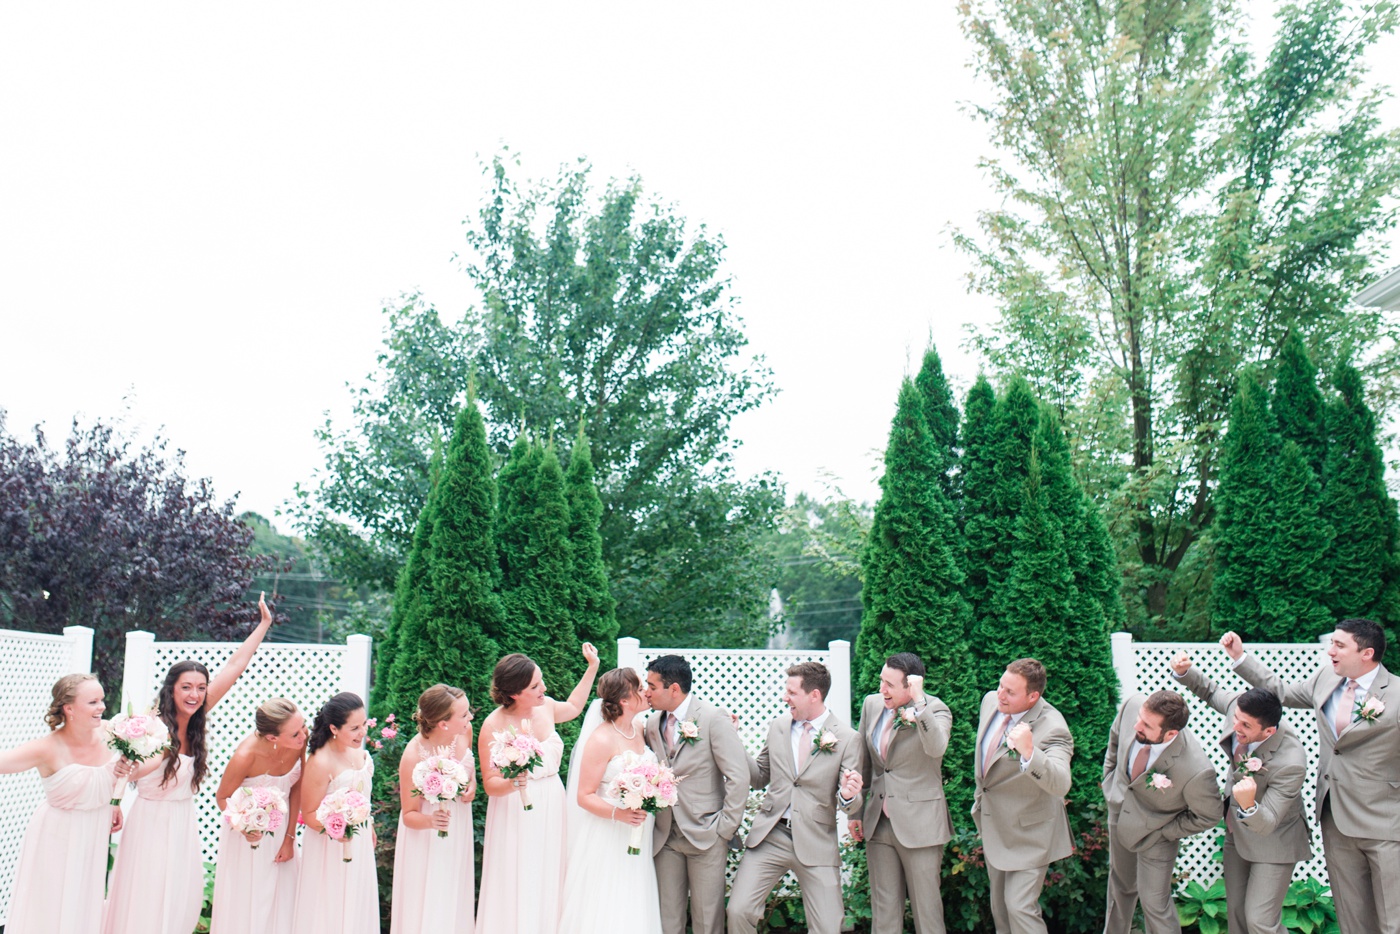 Amanda + Ruben - The Carriage House Wedding - Galloway New Jersey Photographer - Alison Dunn Photography-71